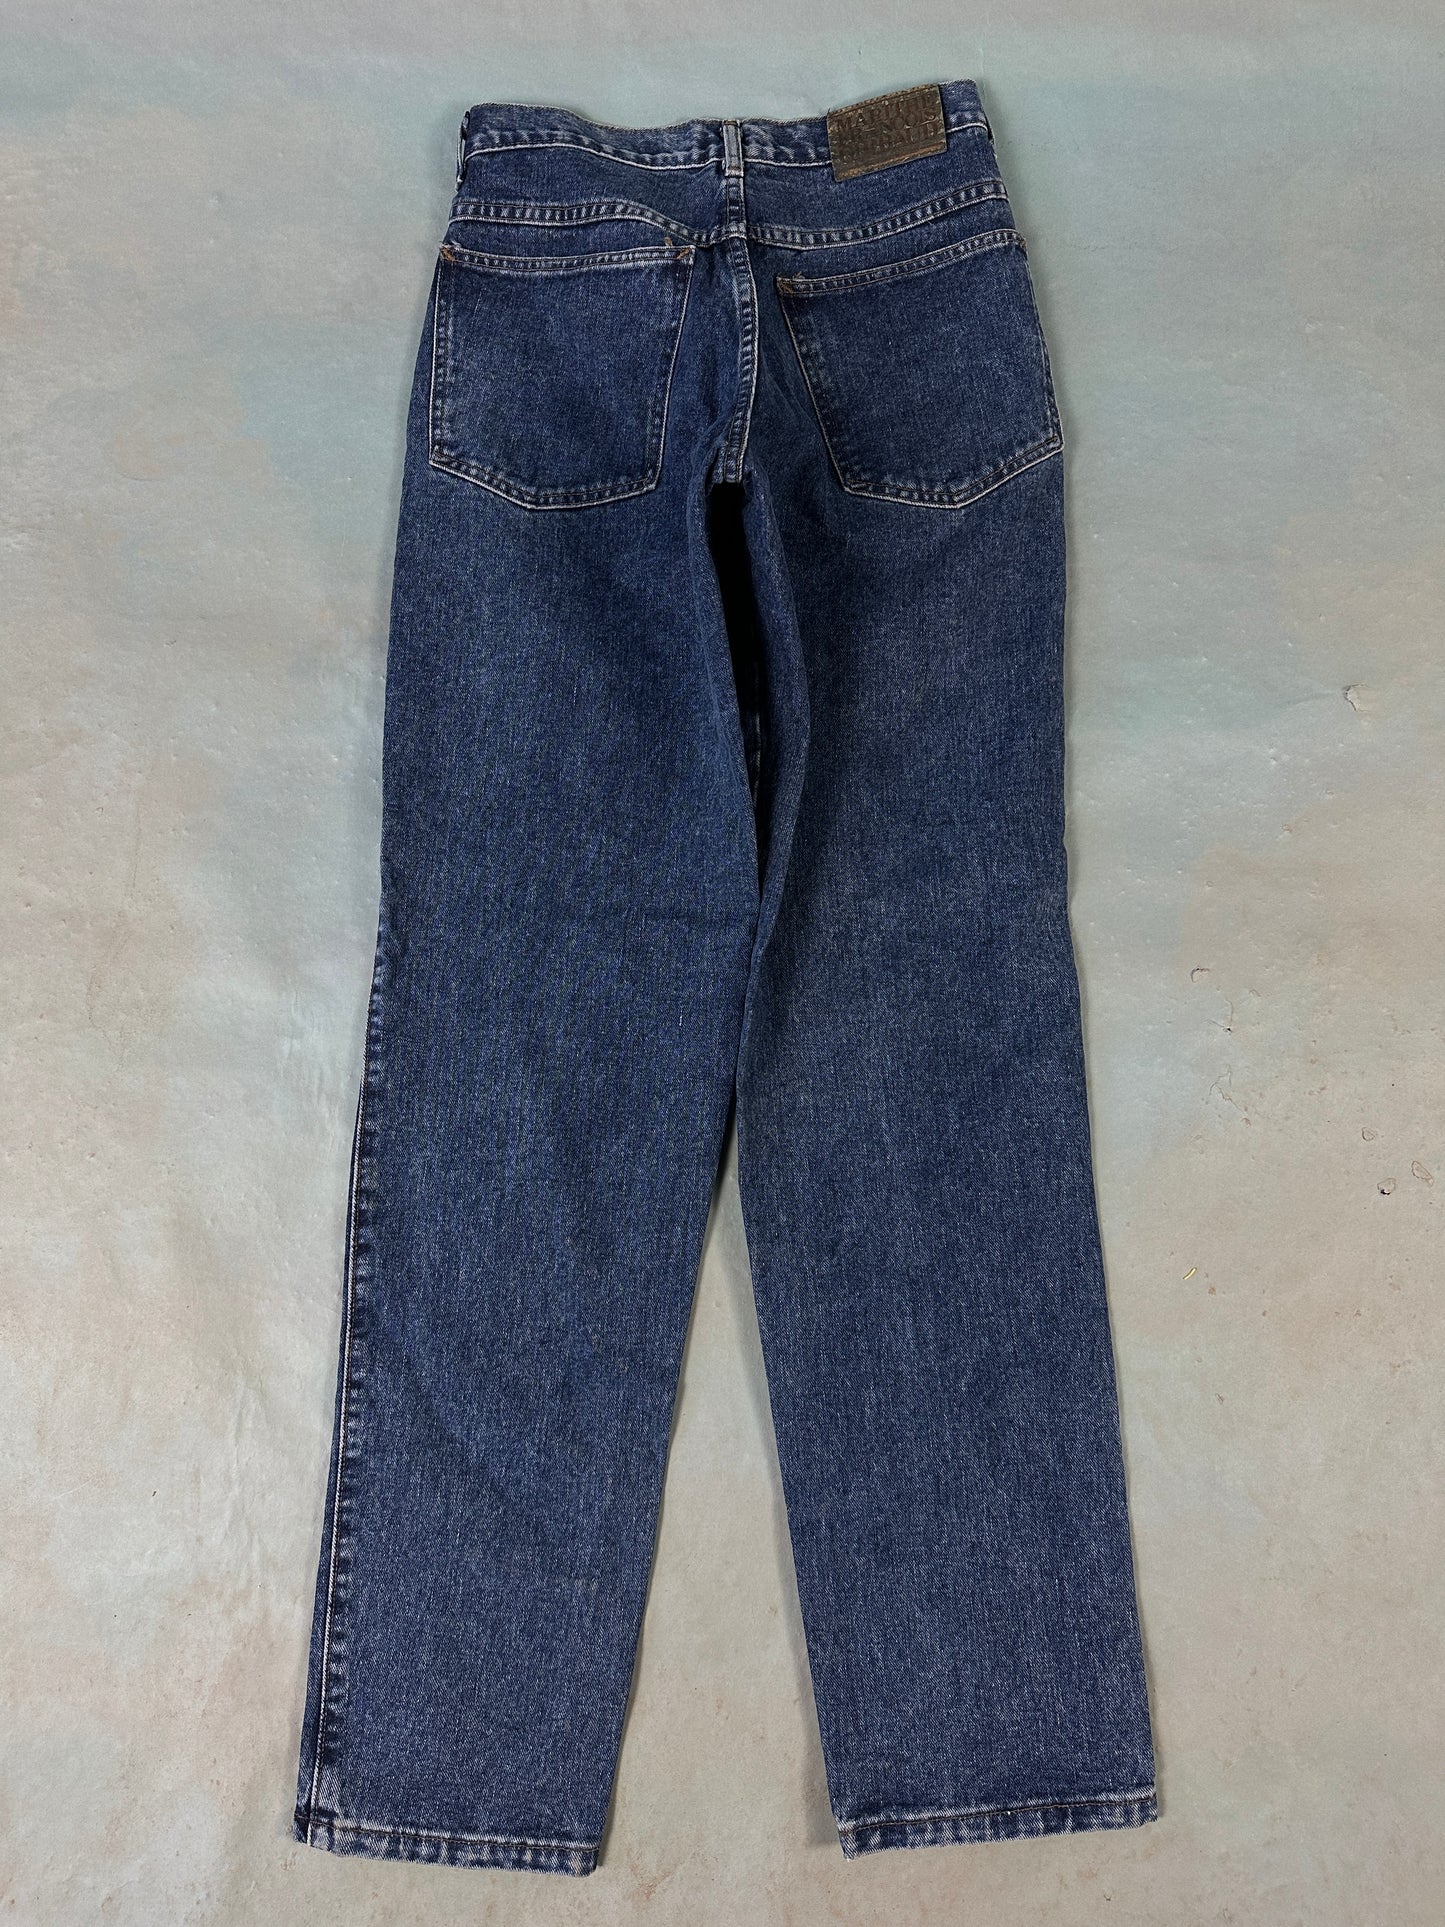 Marithe Francois Girbaud Vintage Jeans - 28